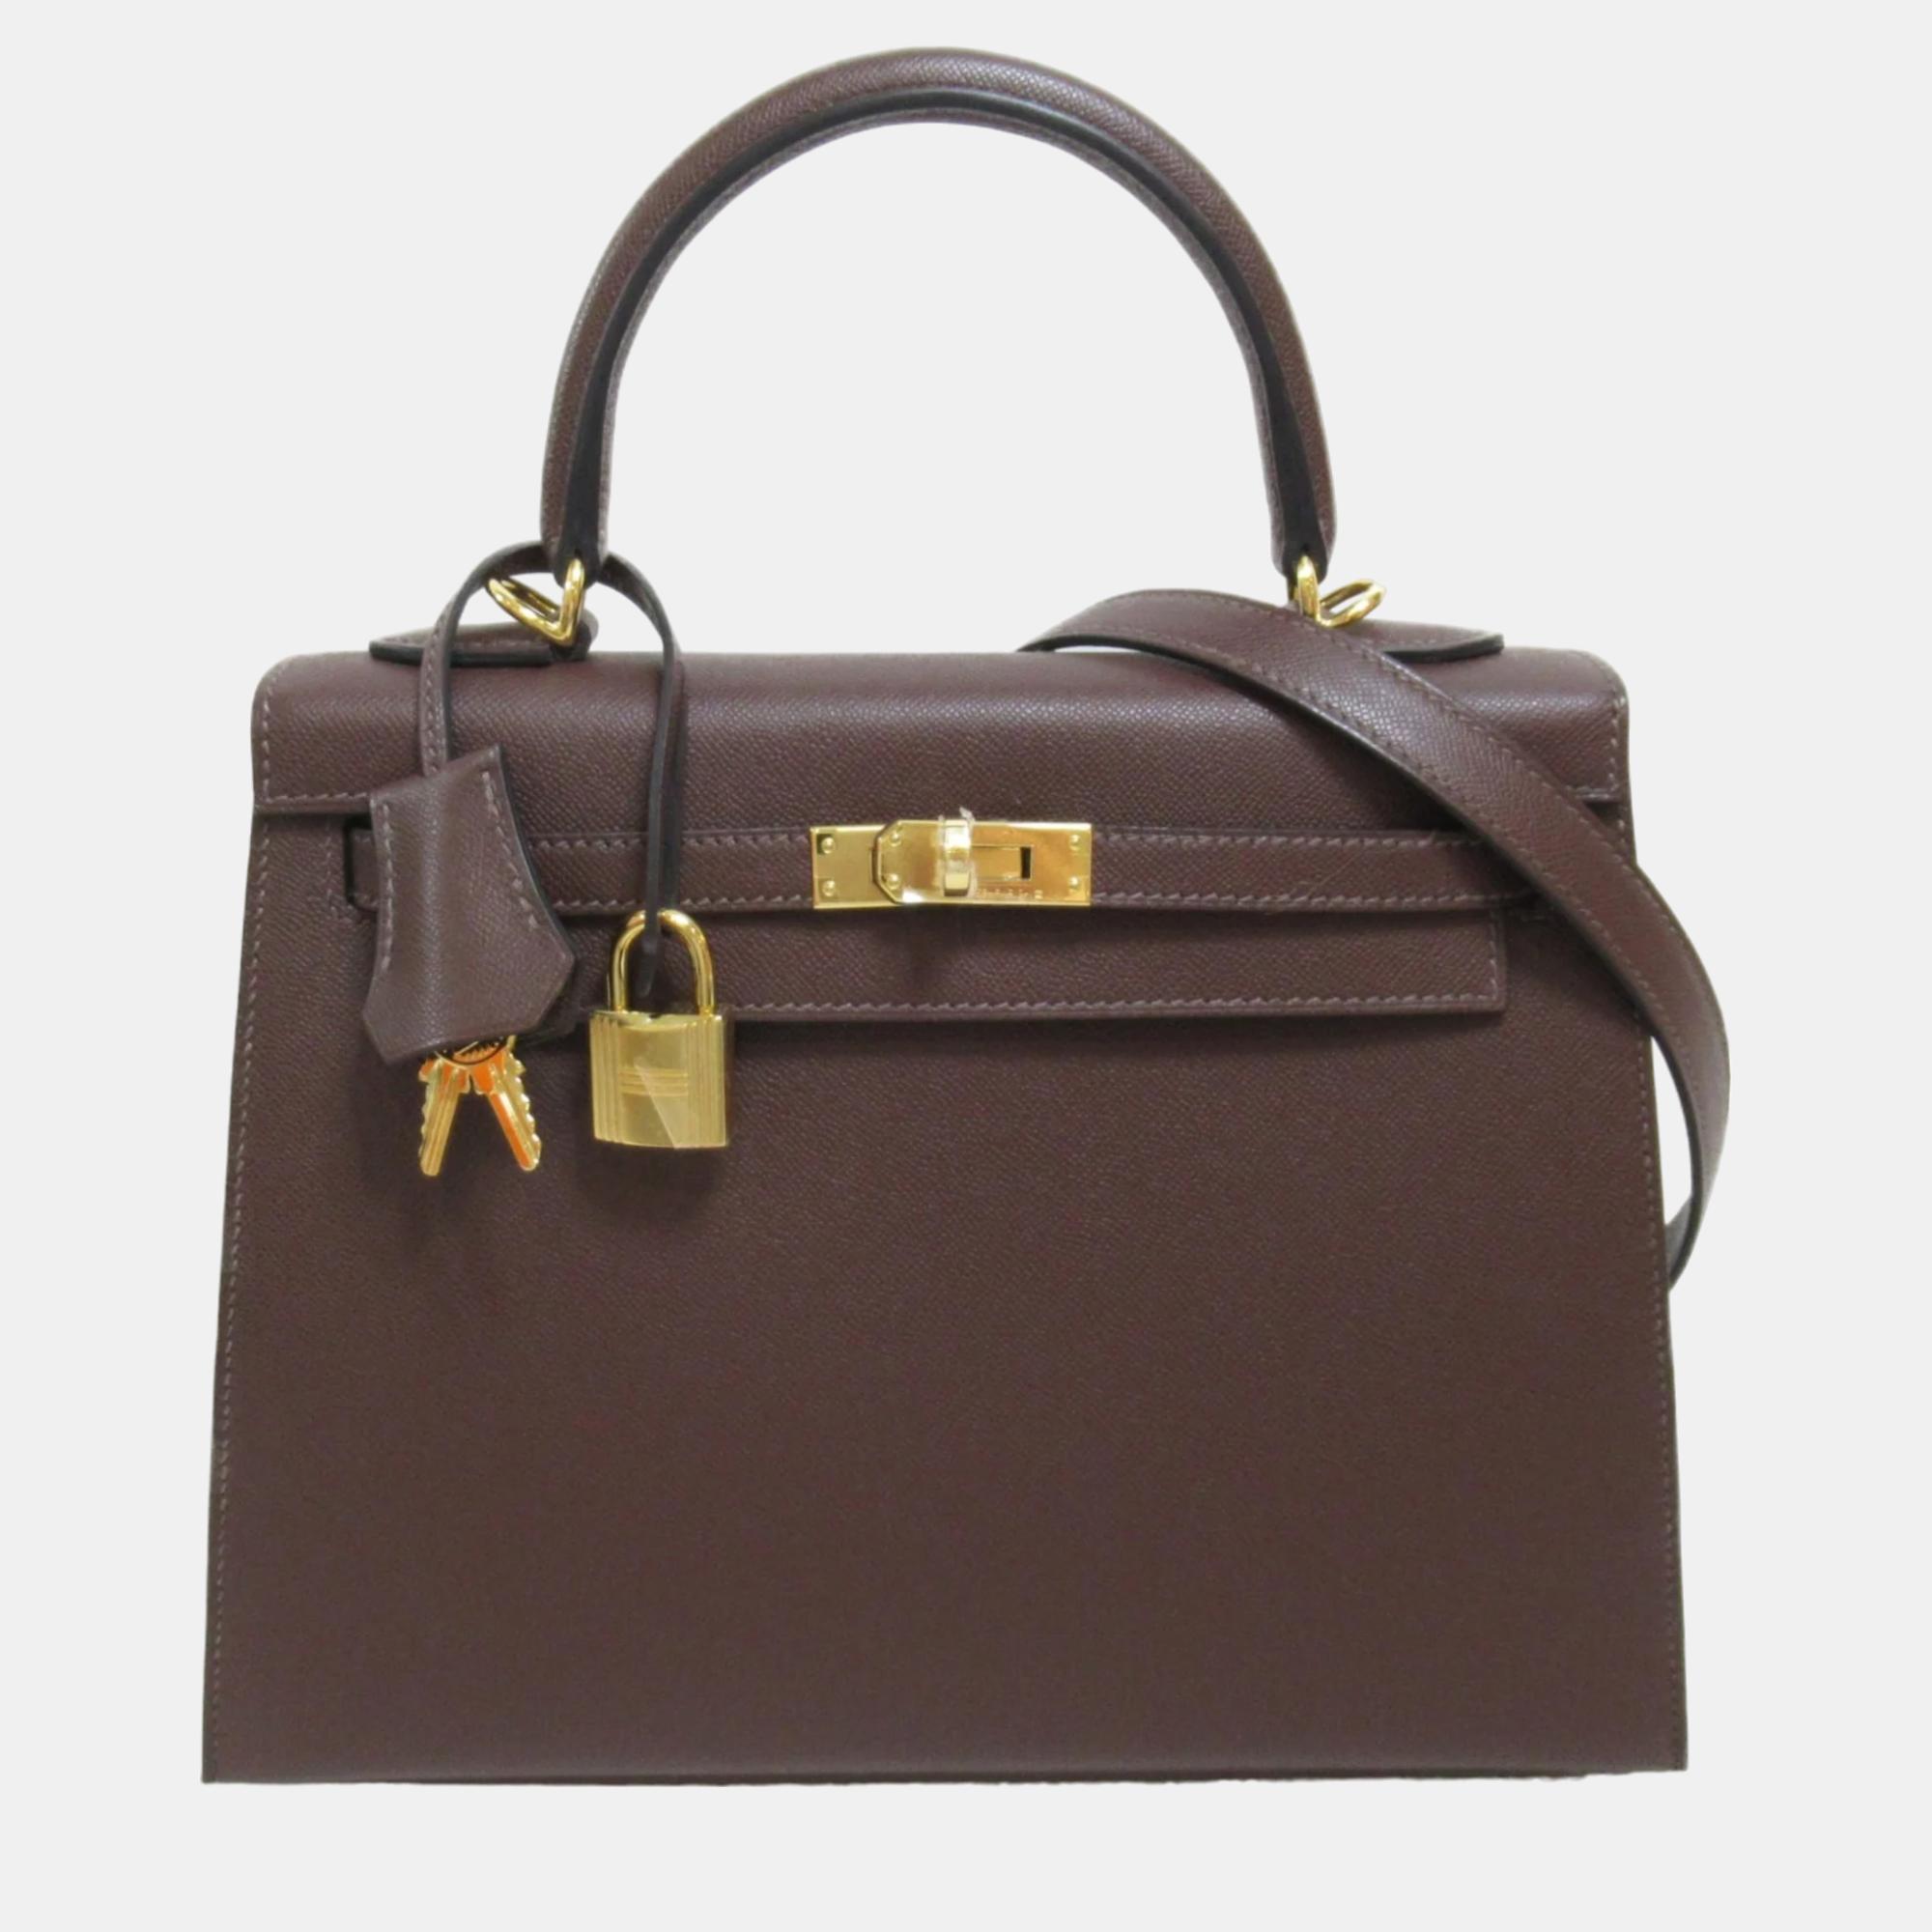 Hermes brown moka vaugham leather kelly handbag